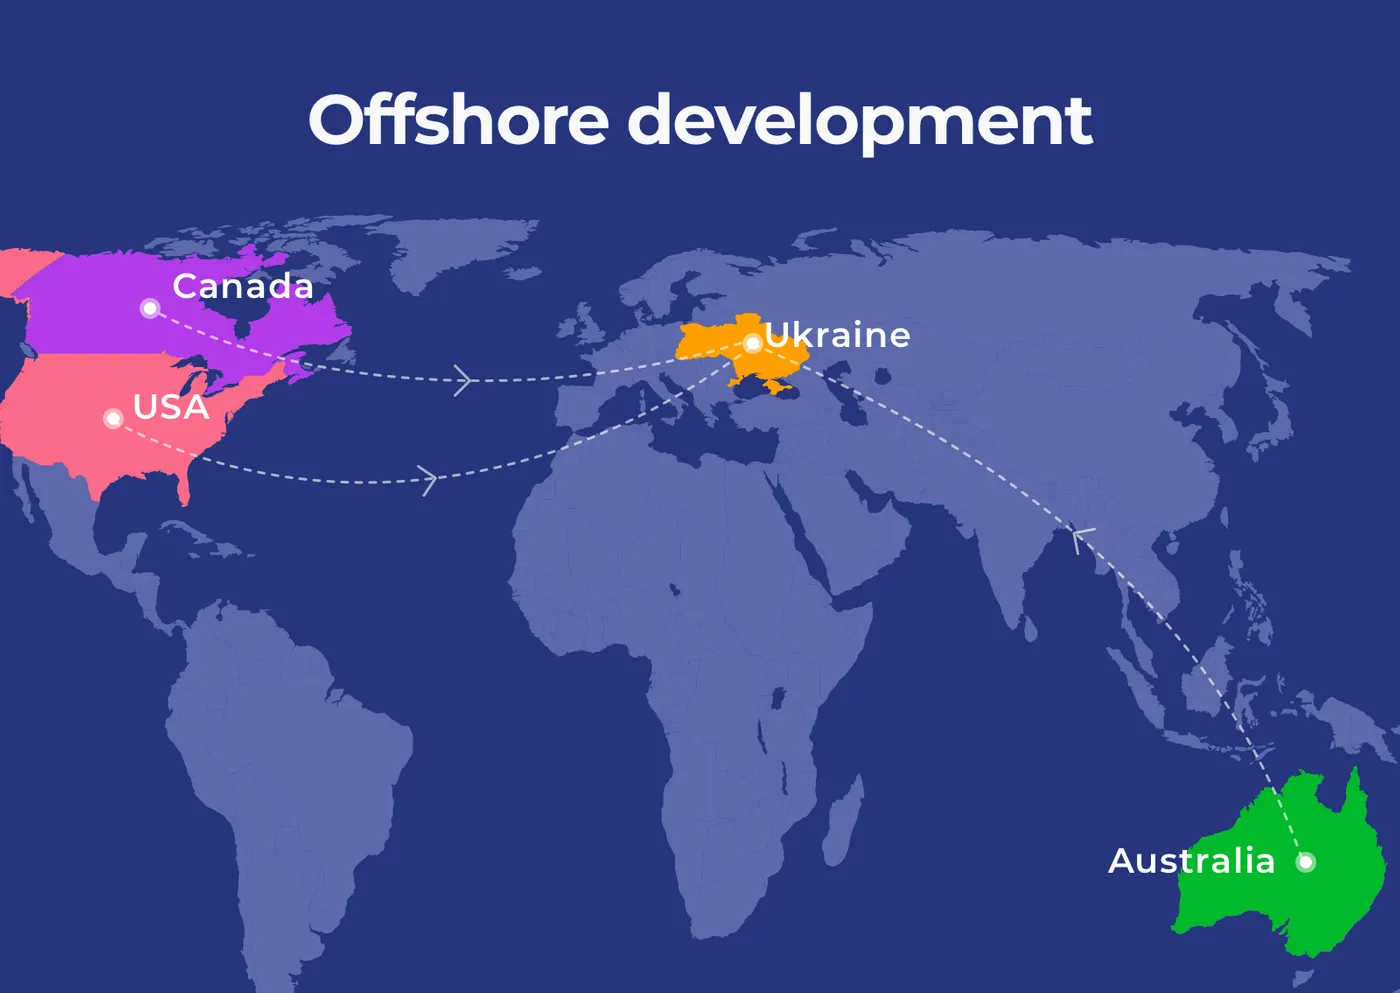 Offshore software development